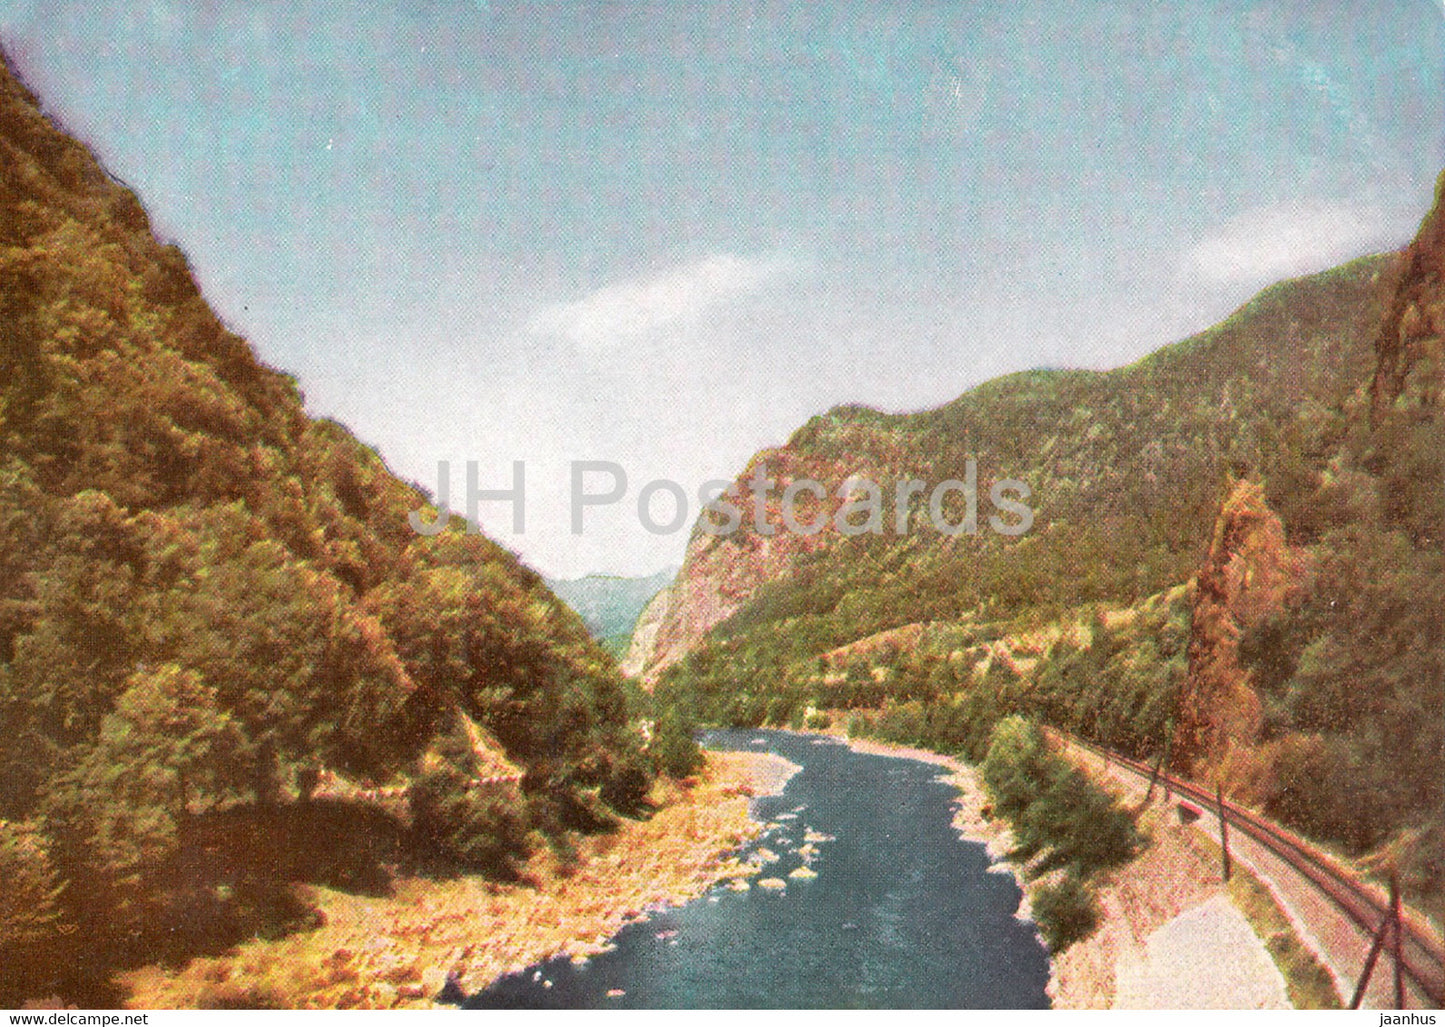 Valley of Olt river in Calimanesti - 1965 - Romania - unused - JH Postcards